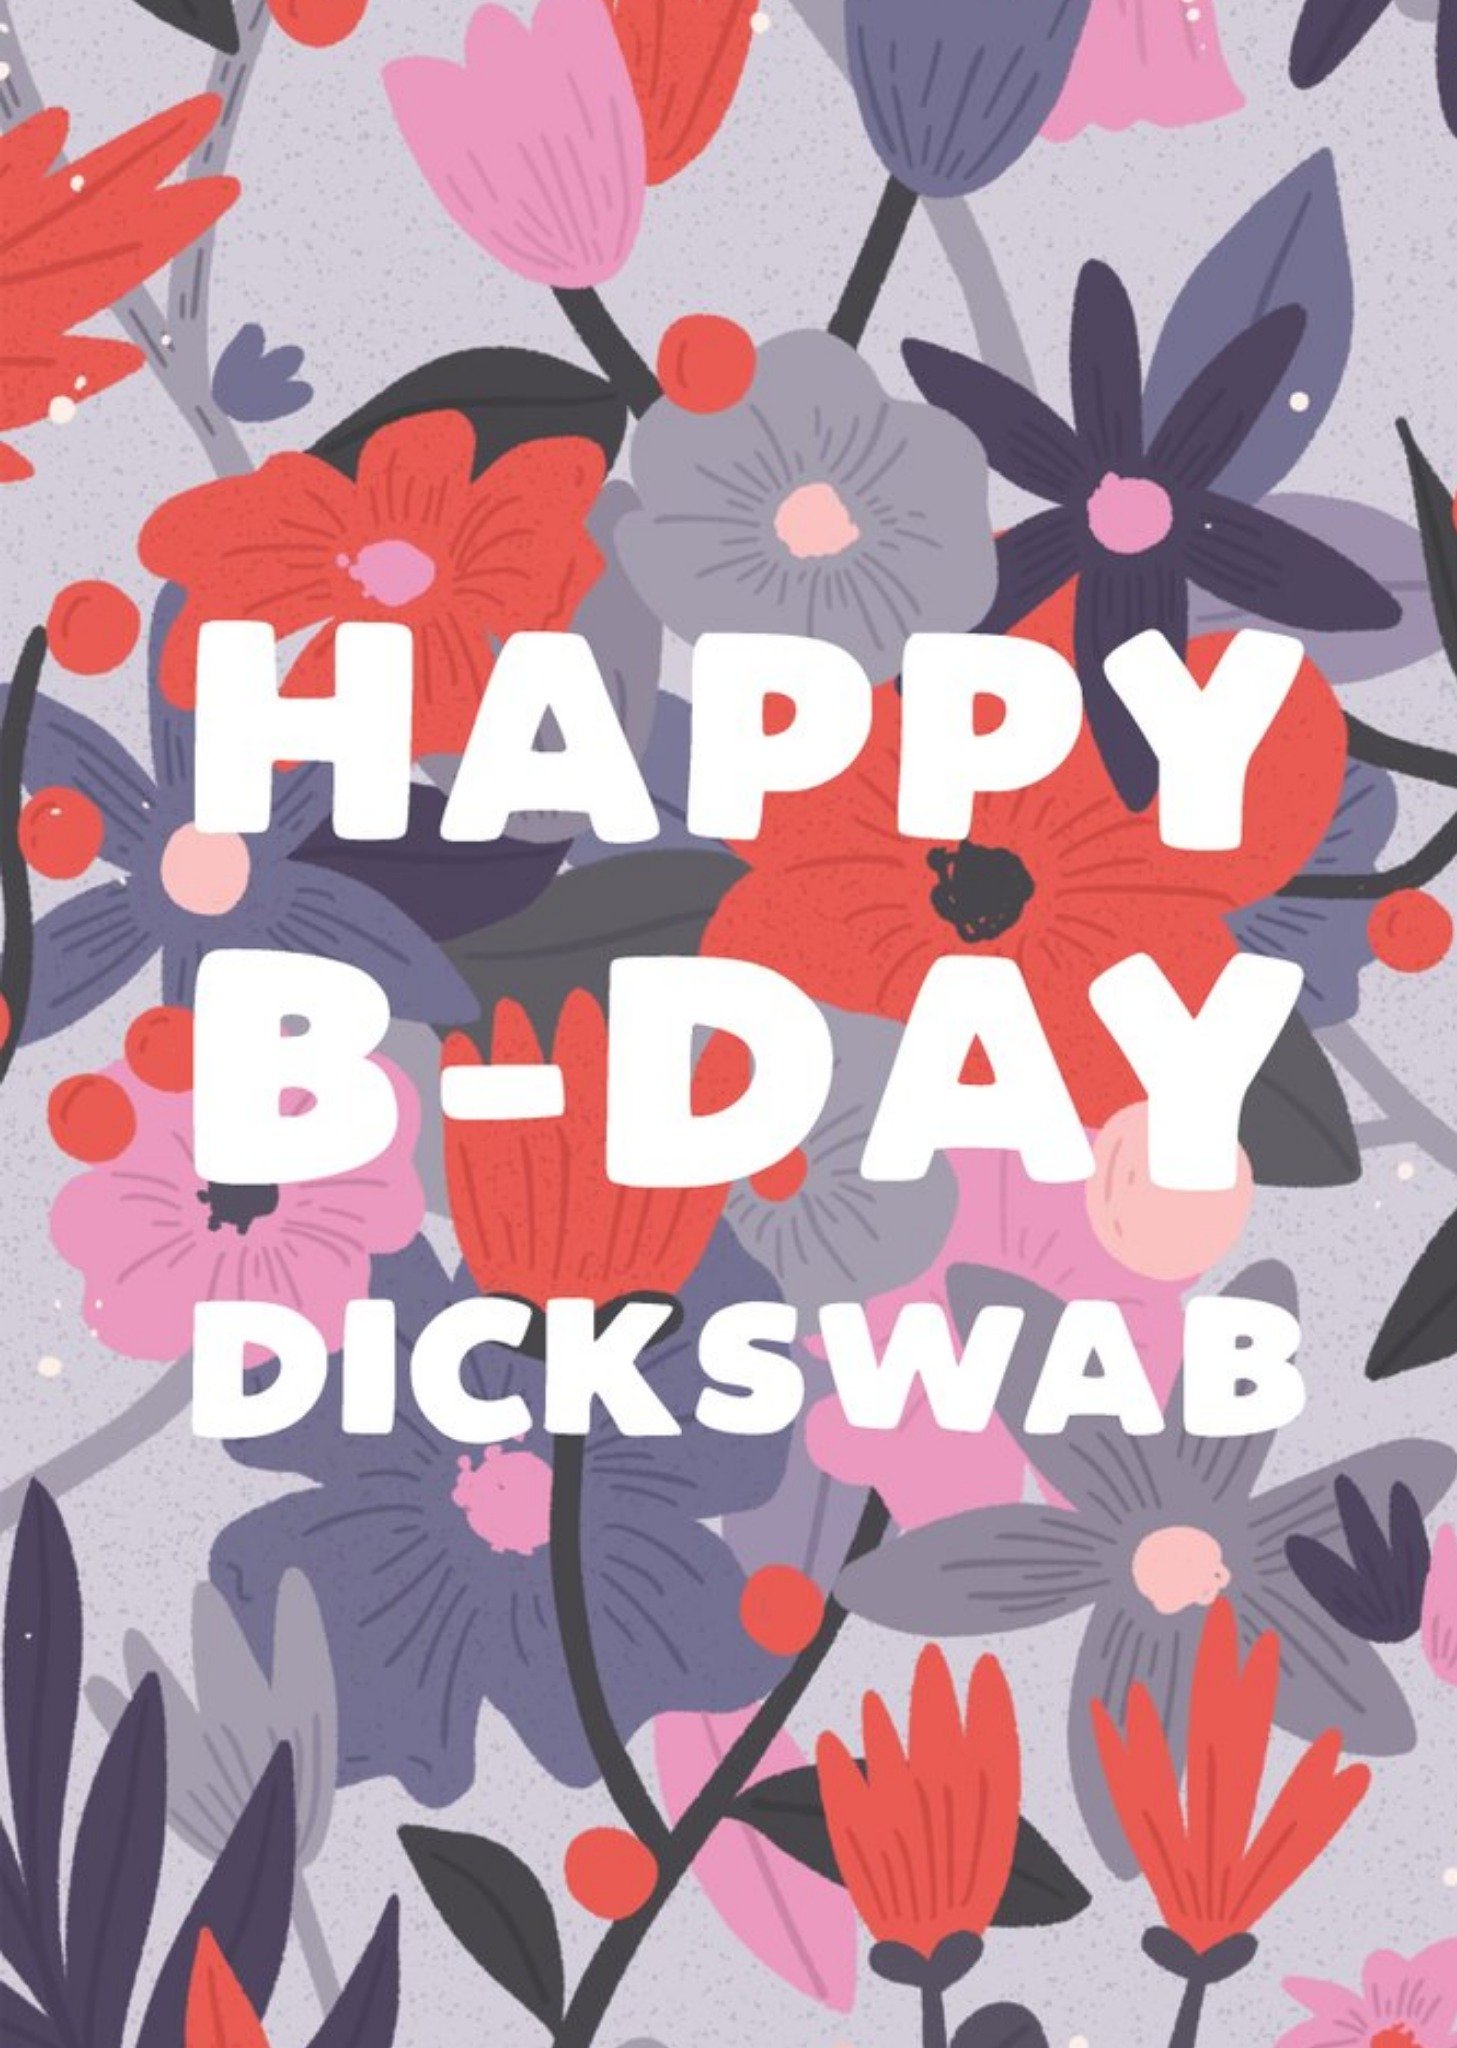 Moonpig Funny Rude Floral Happy B-Day Dickswab Birthday Card Ecard